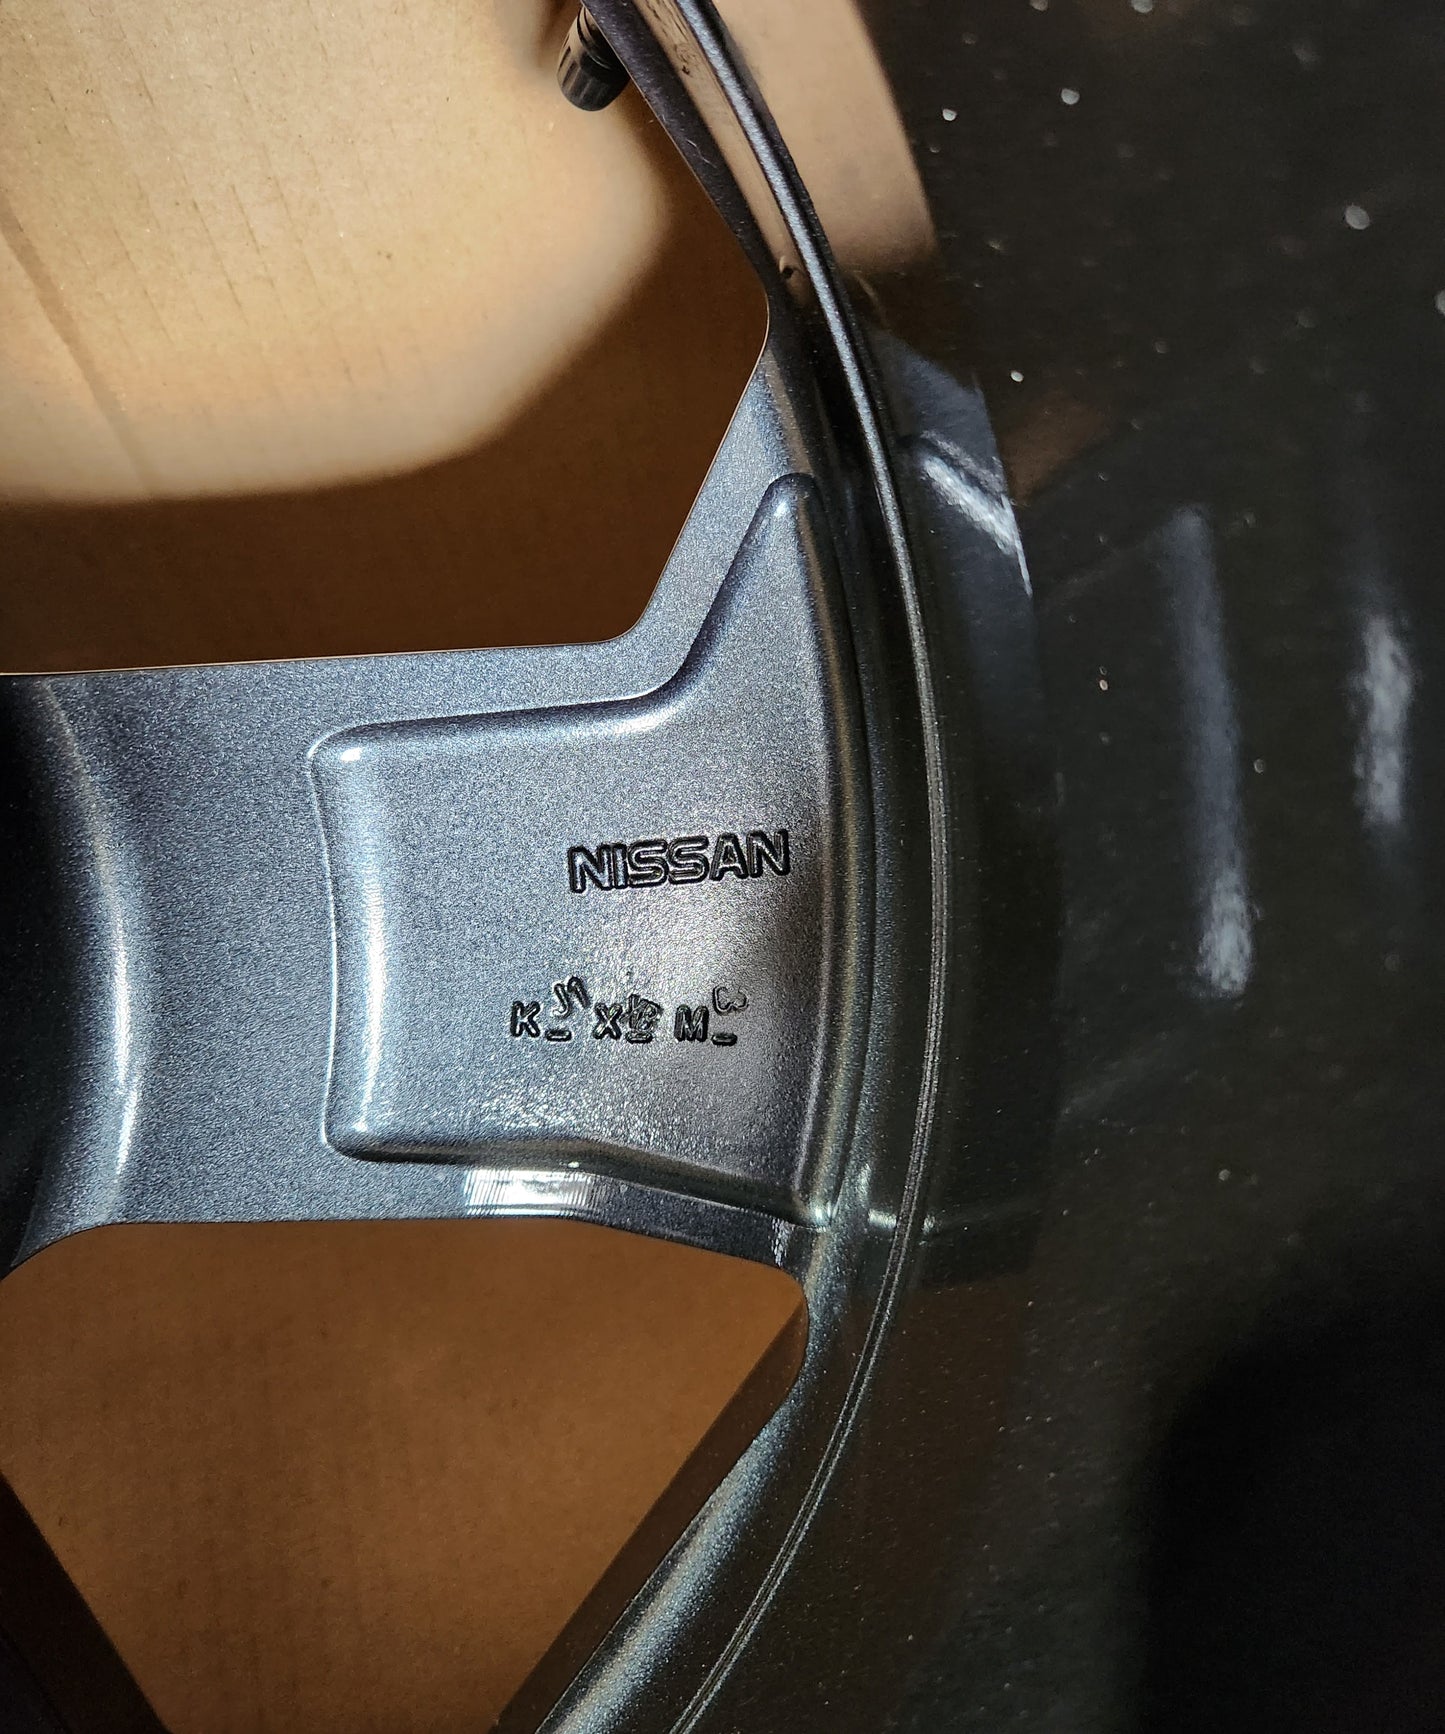 Nissan Qashqai 18" Alloy Wheels Diamond Cut and Grey set of 4 D03006UA3A